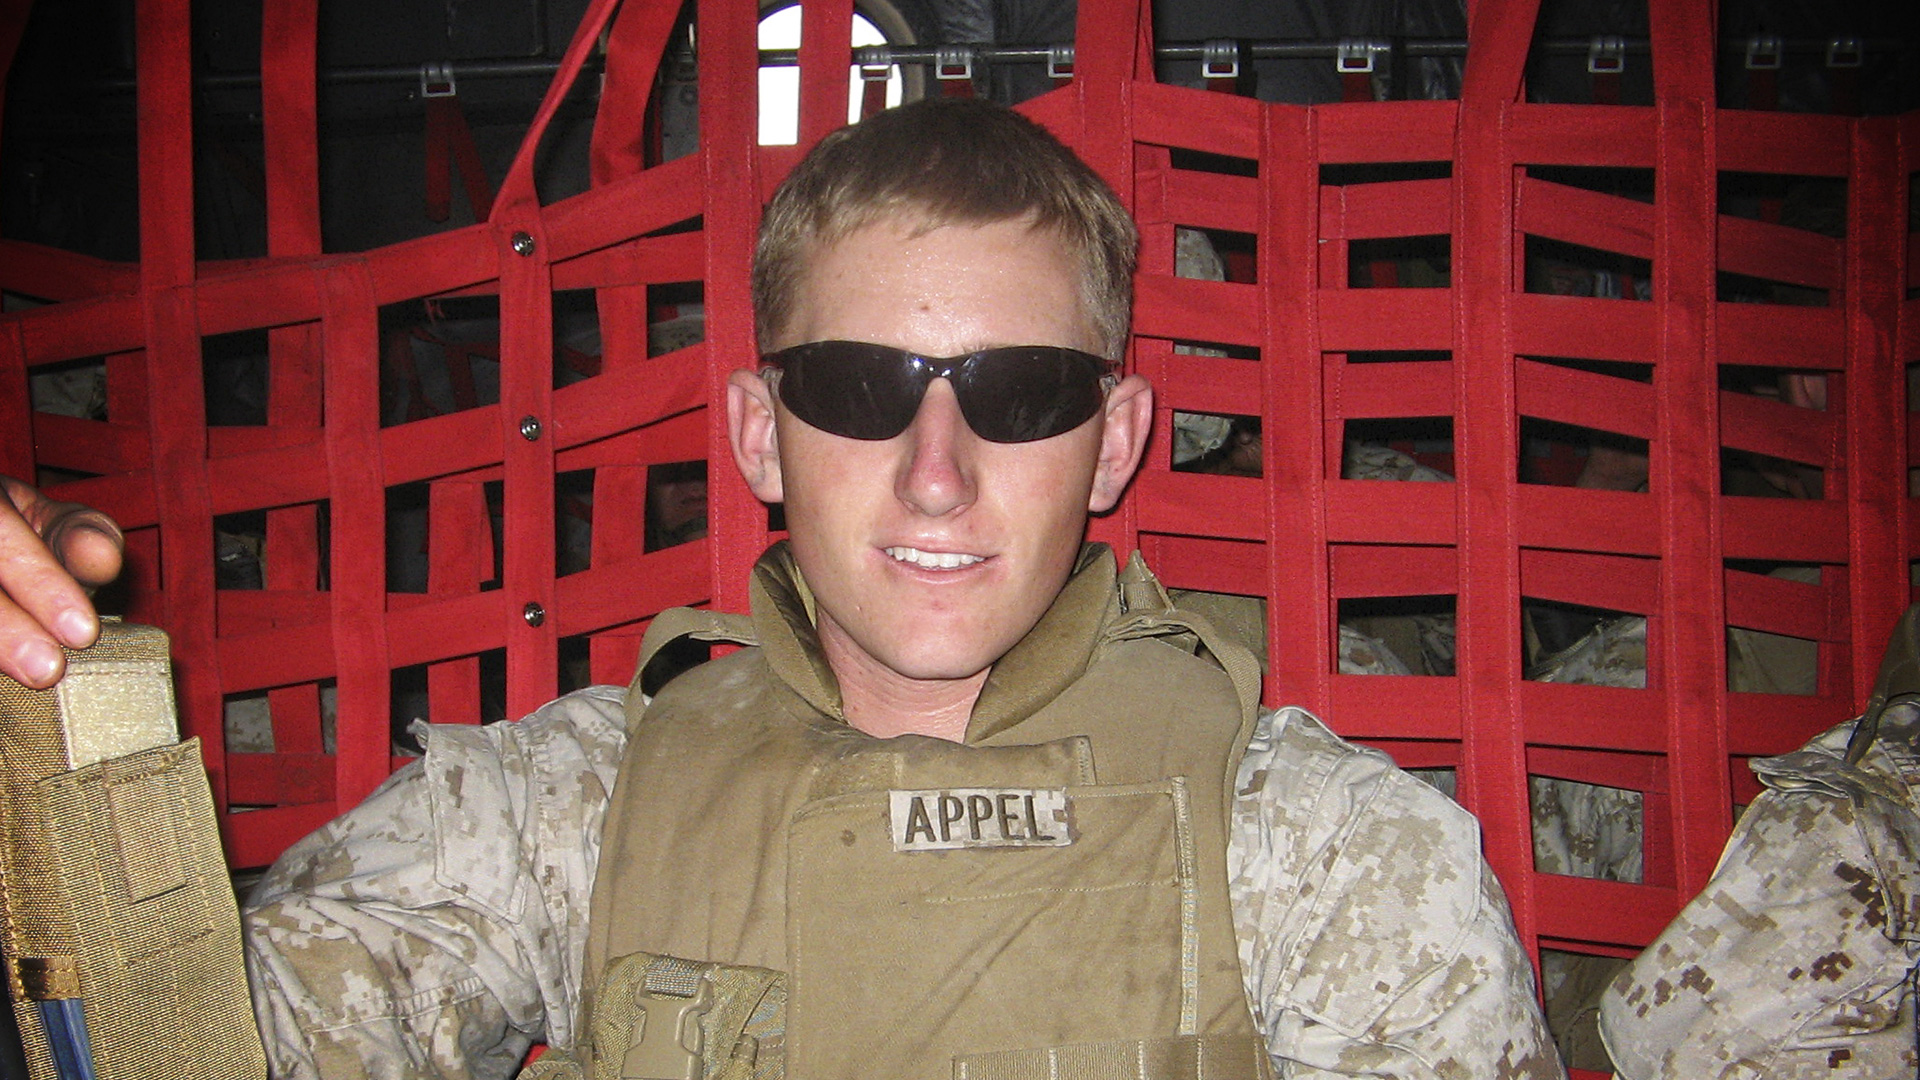 Travis Appel in military uniform. Photo courtesy Travis Appel